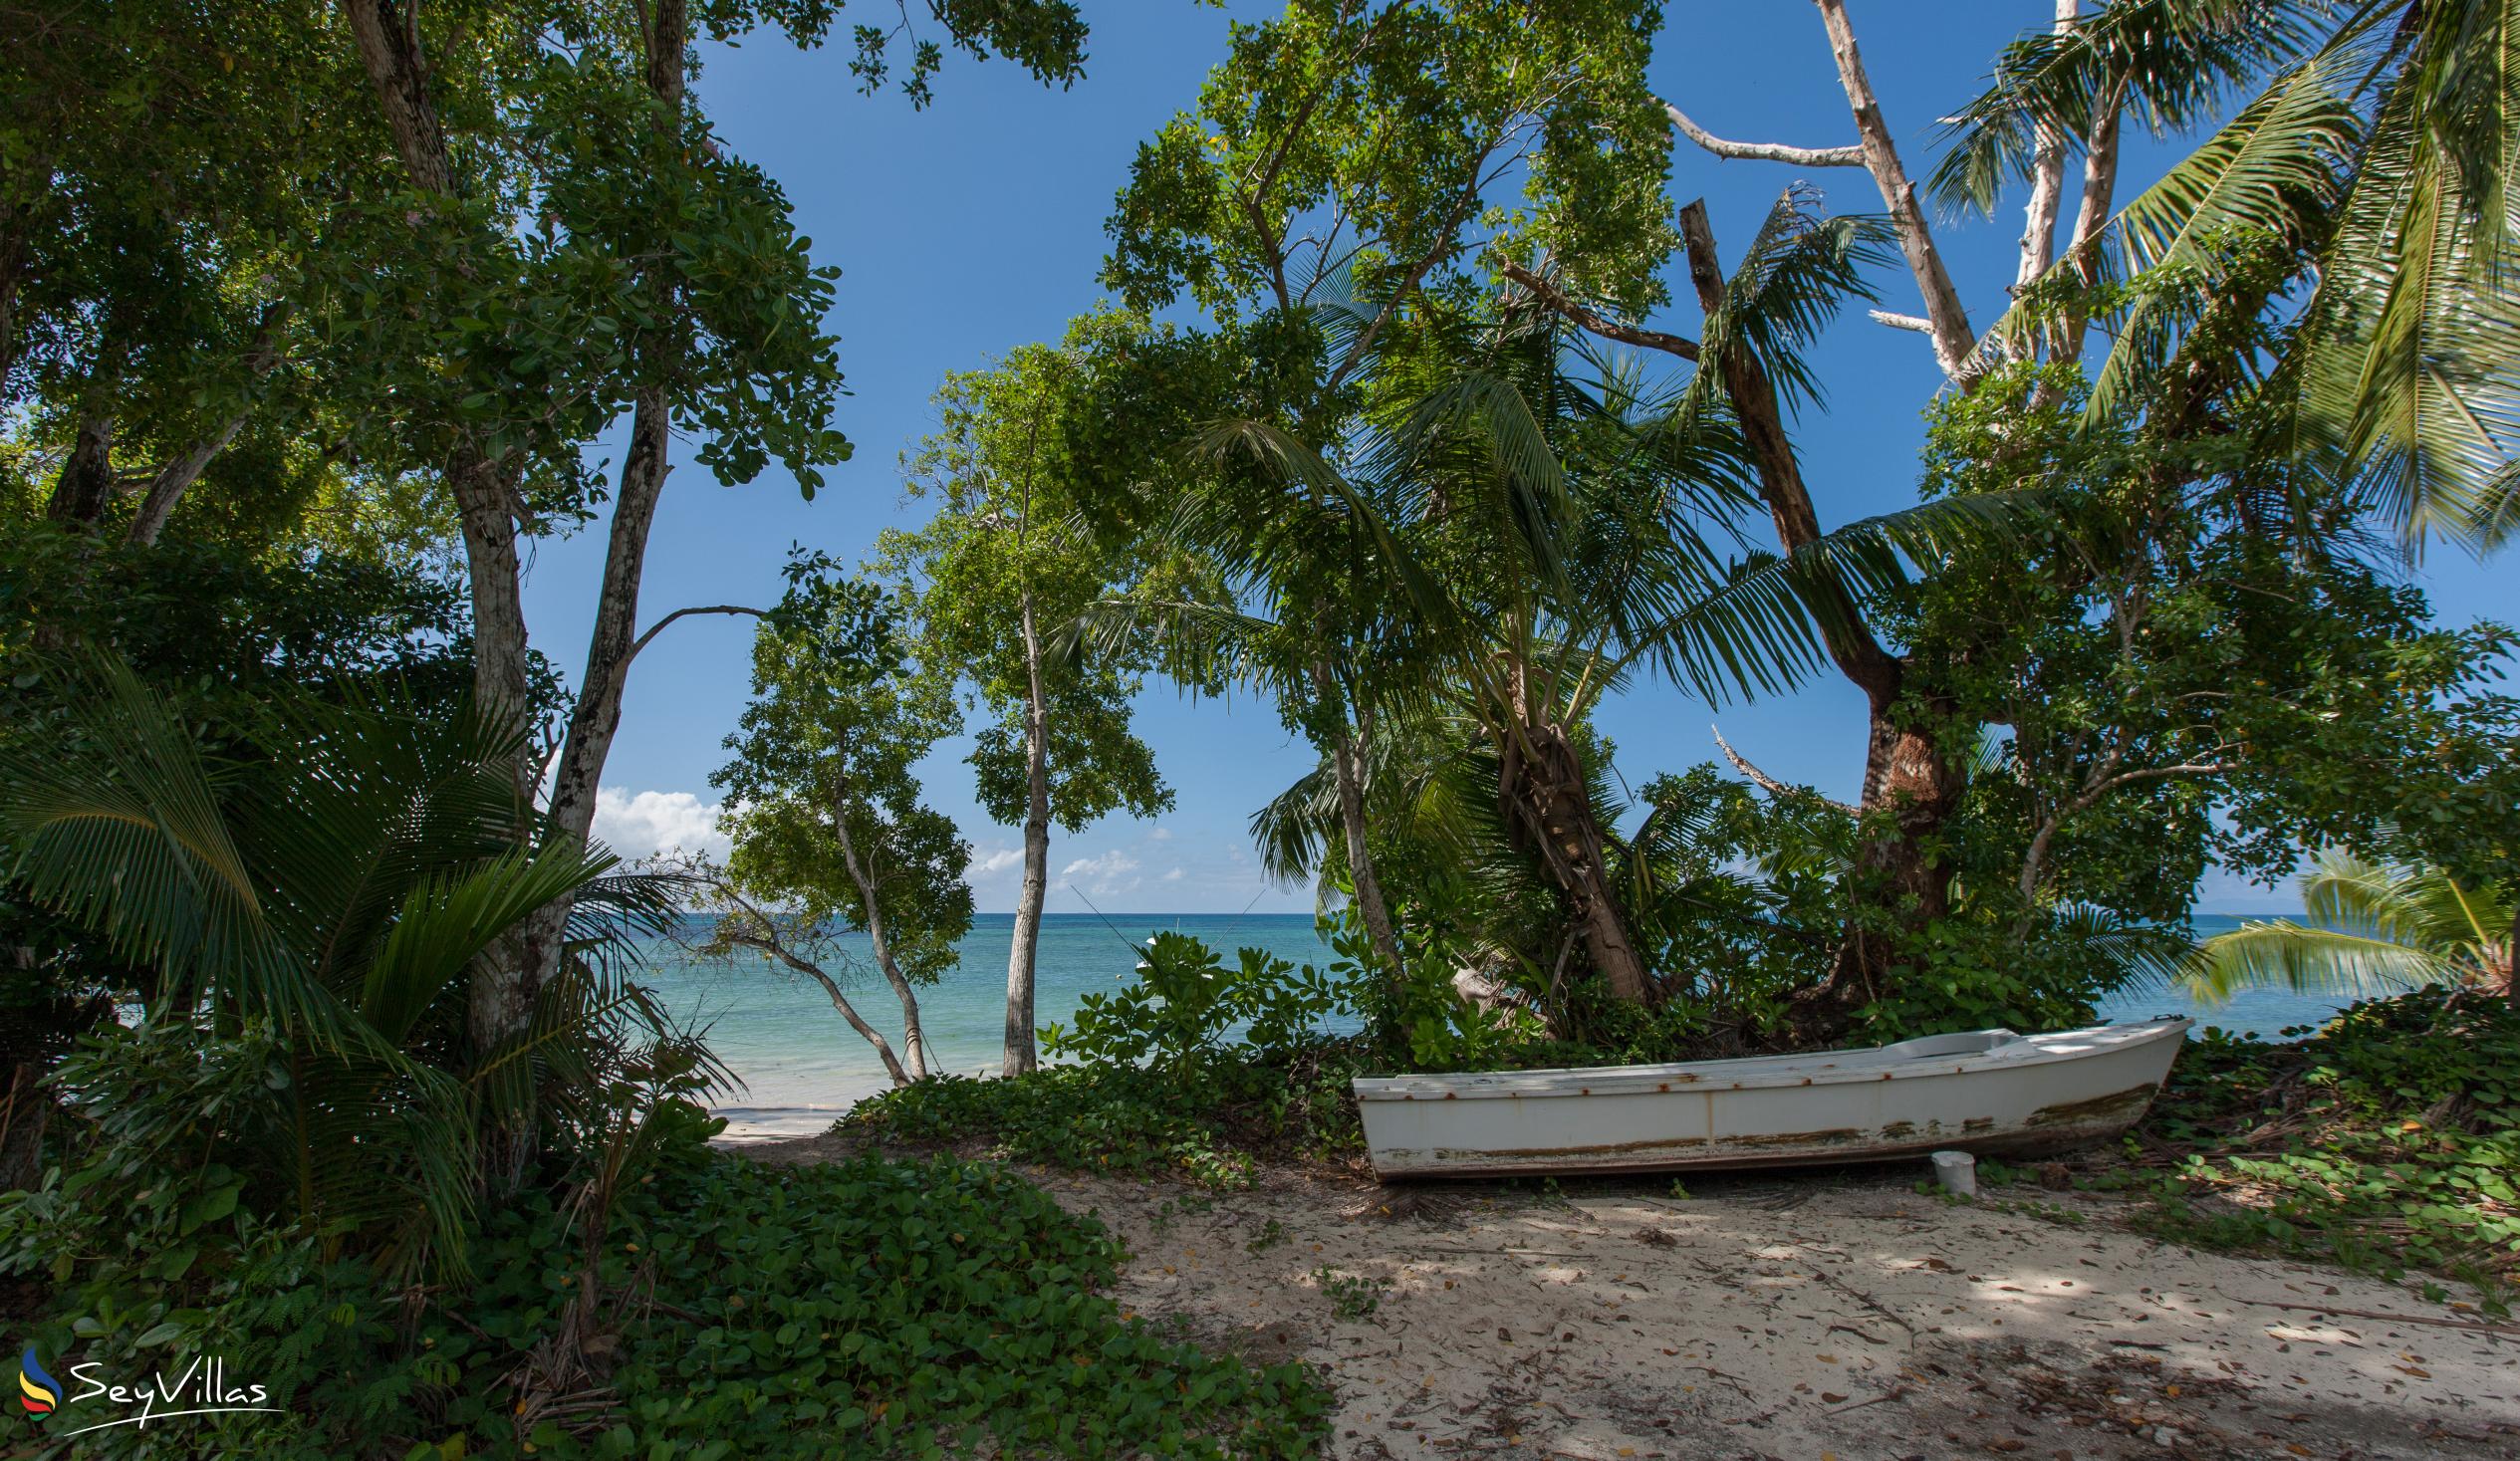 Foto 11: Anse St Sauveur - Praslin (Seychelles)